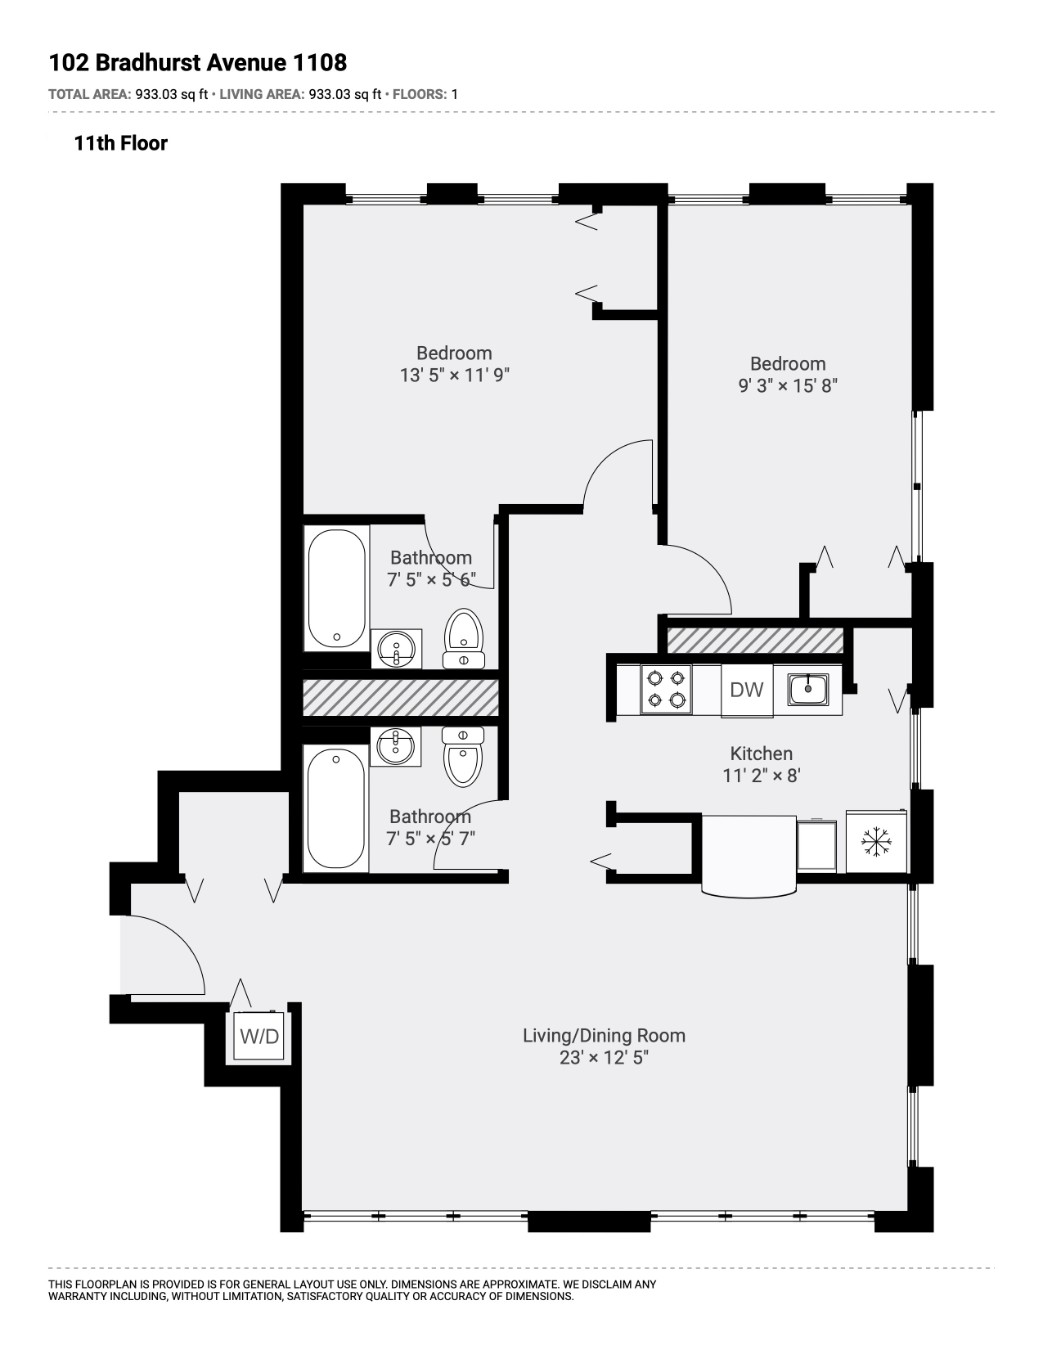 Floorplan for 102 Bradhurst Avenue, 1108